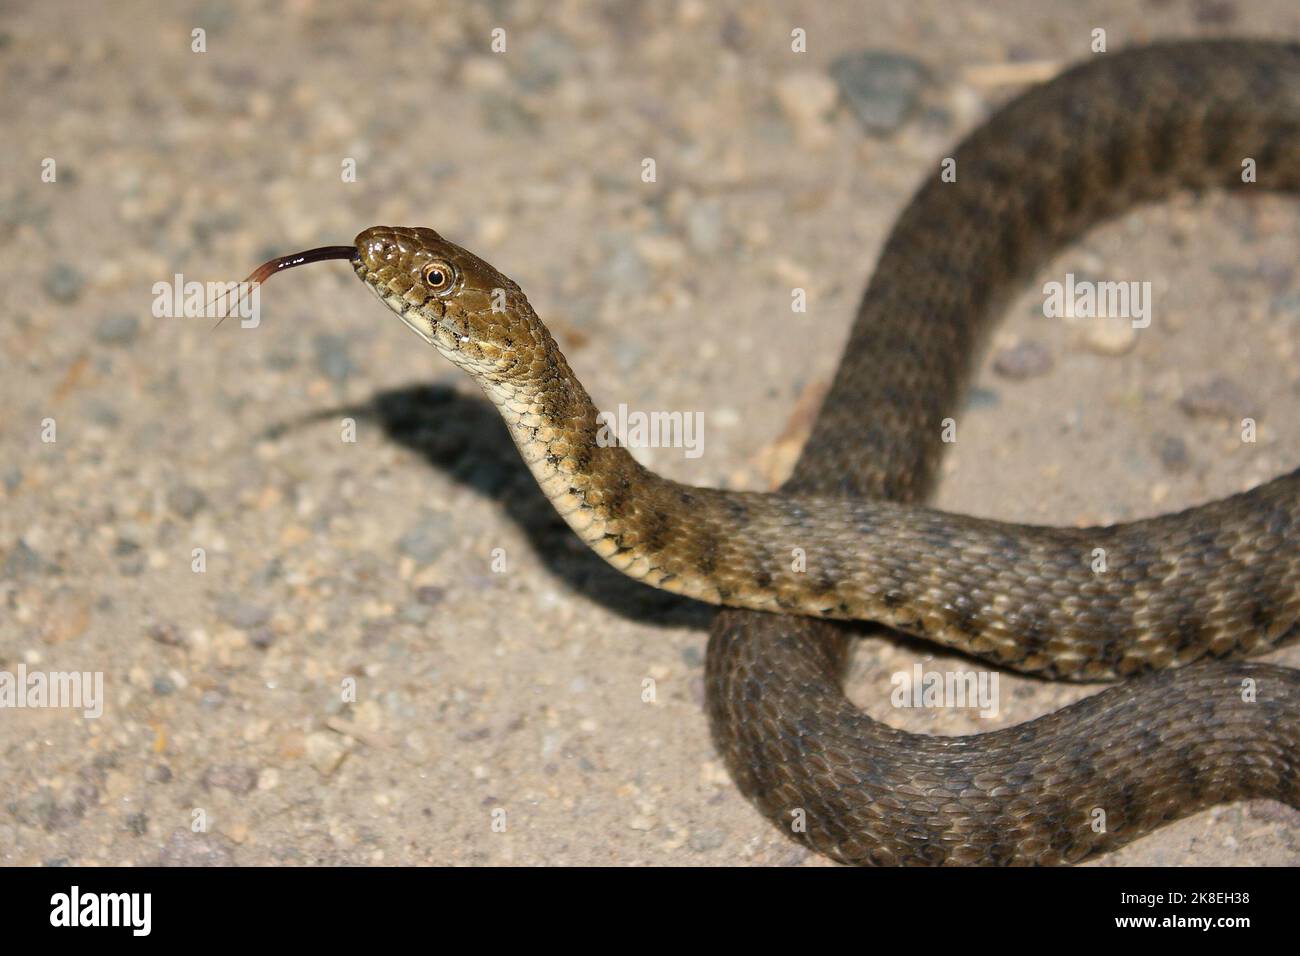 Dice snake (Natrix tessellata) in natural habitat Stock Photo